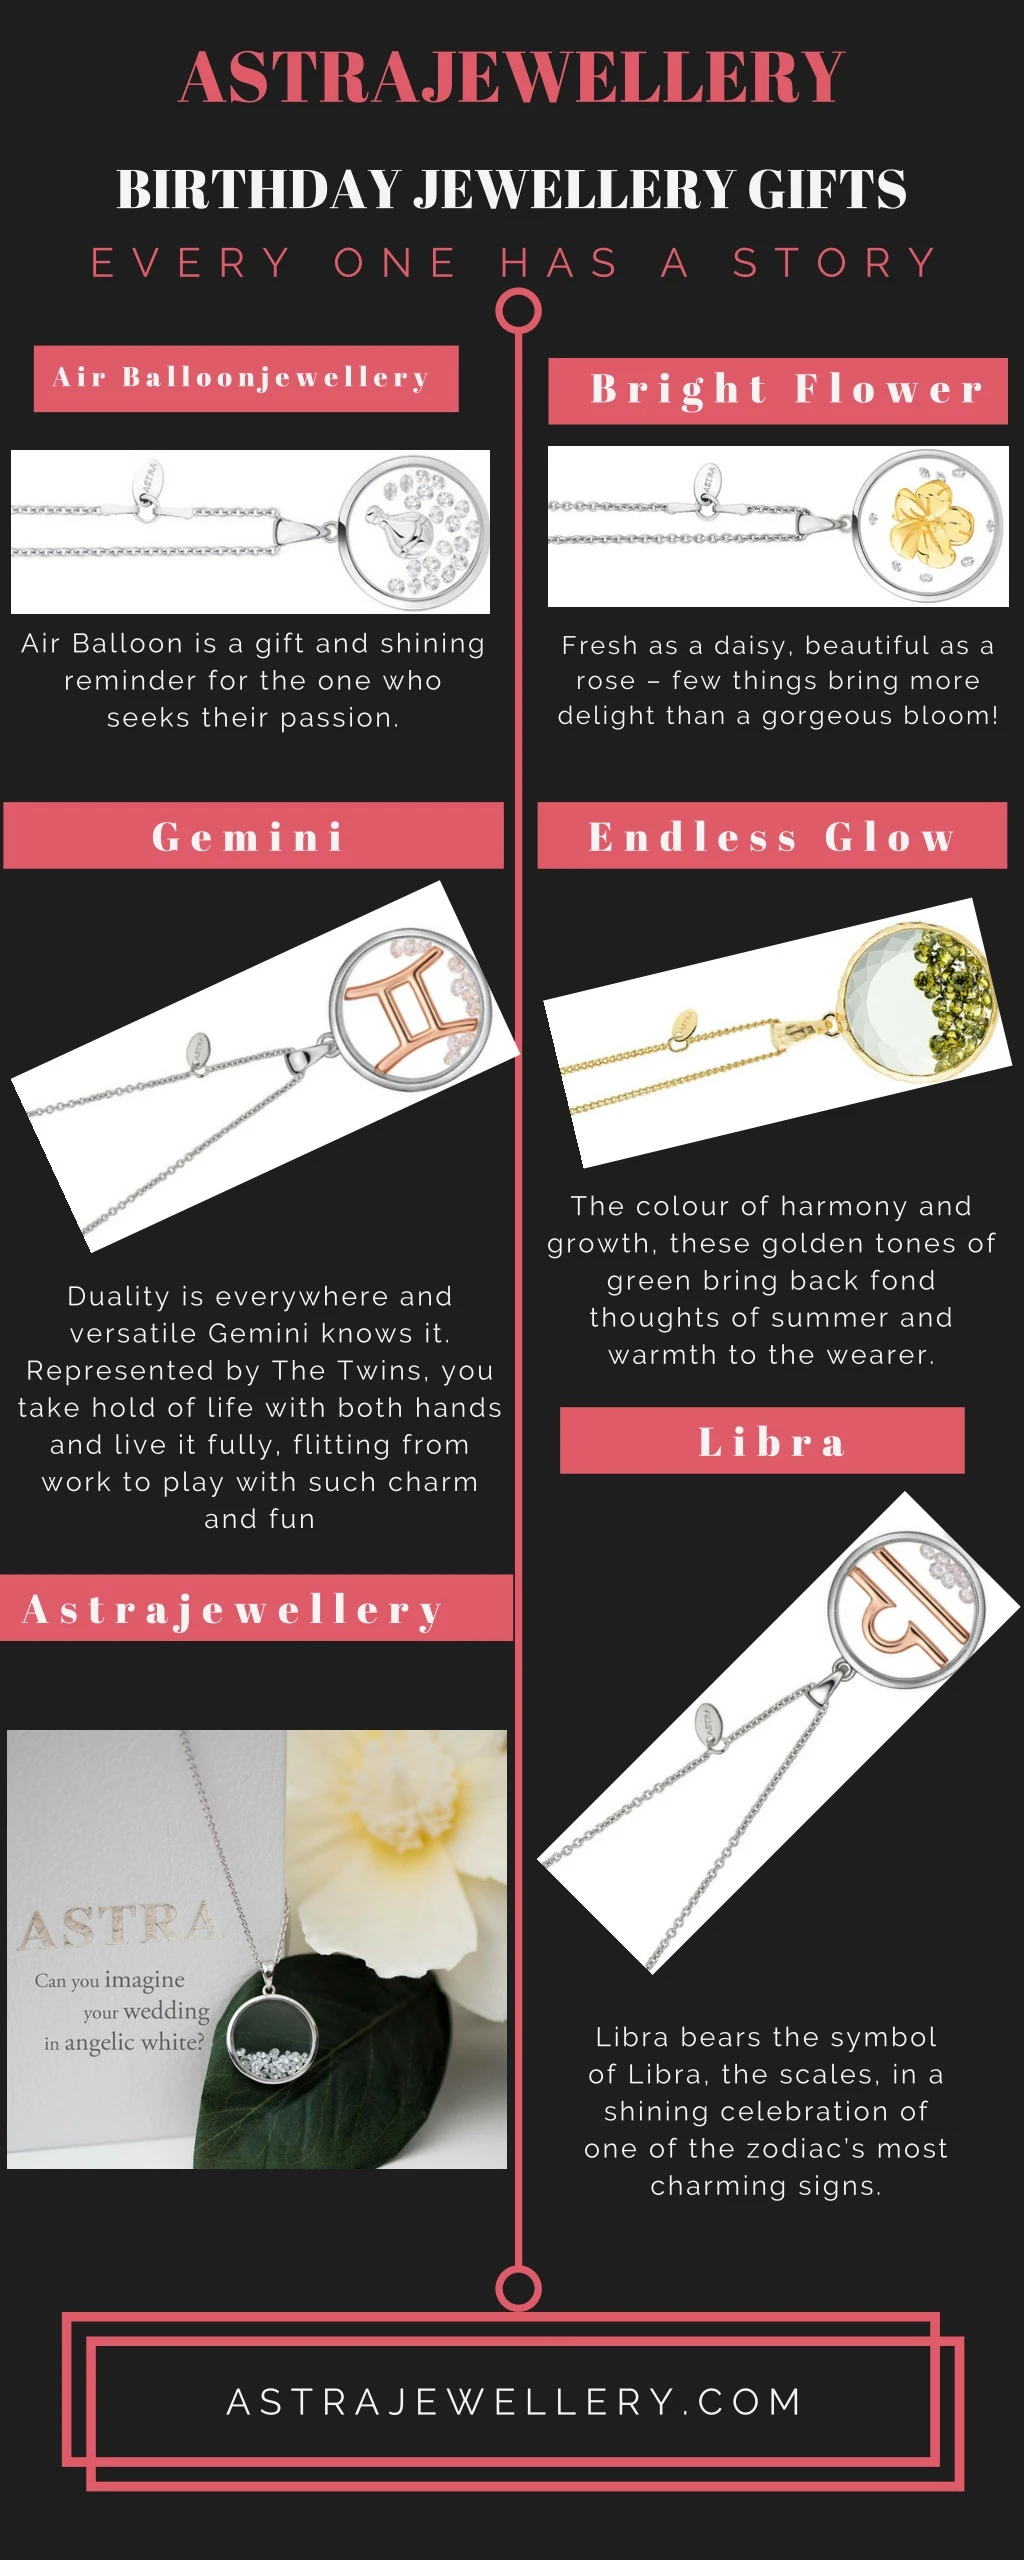 astrajewellery